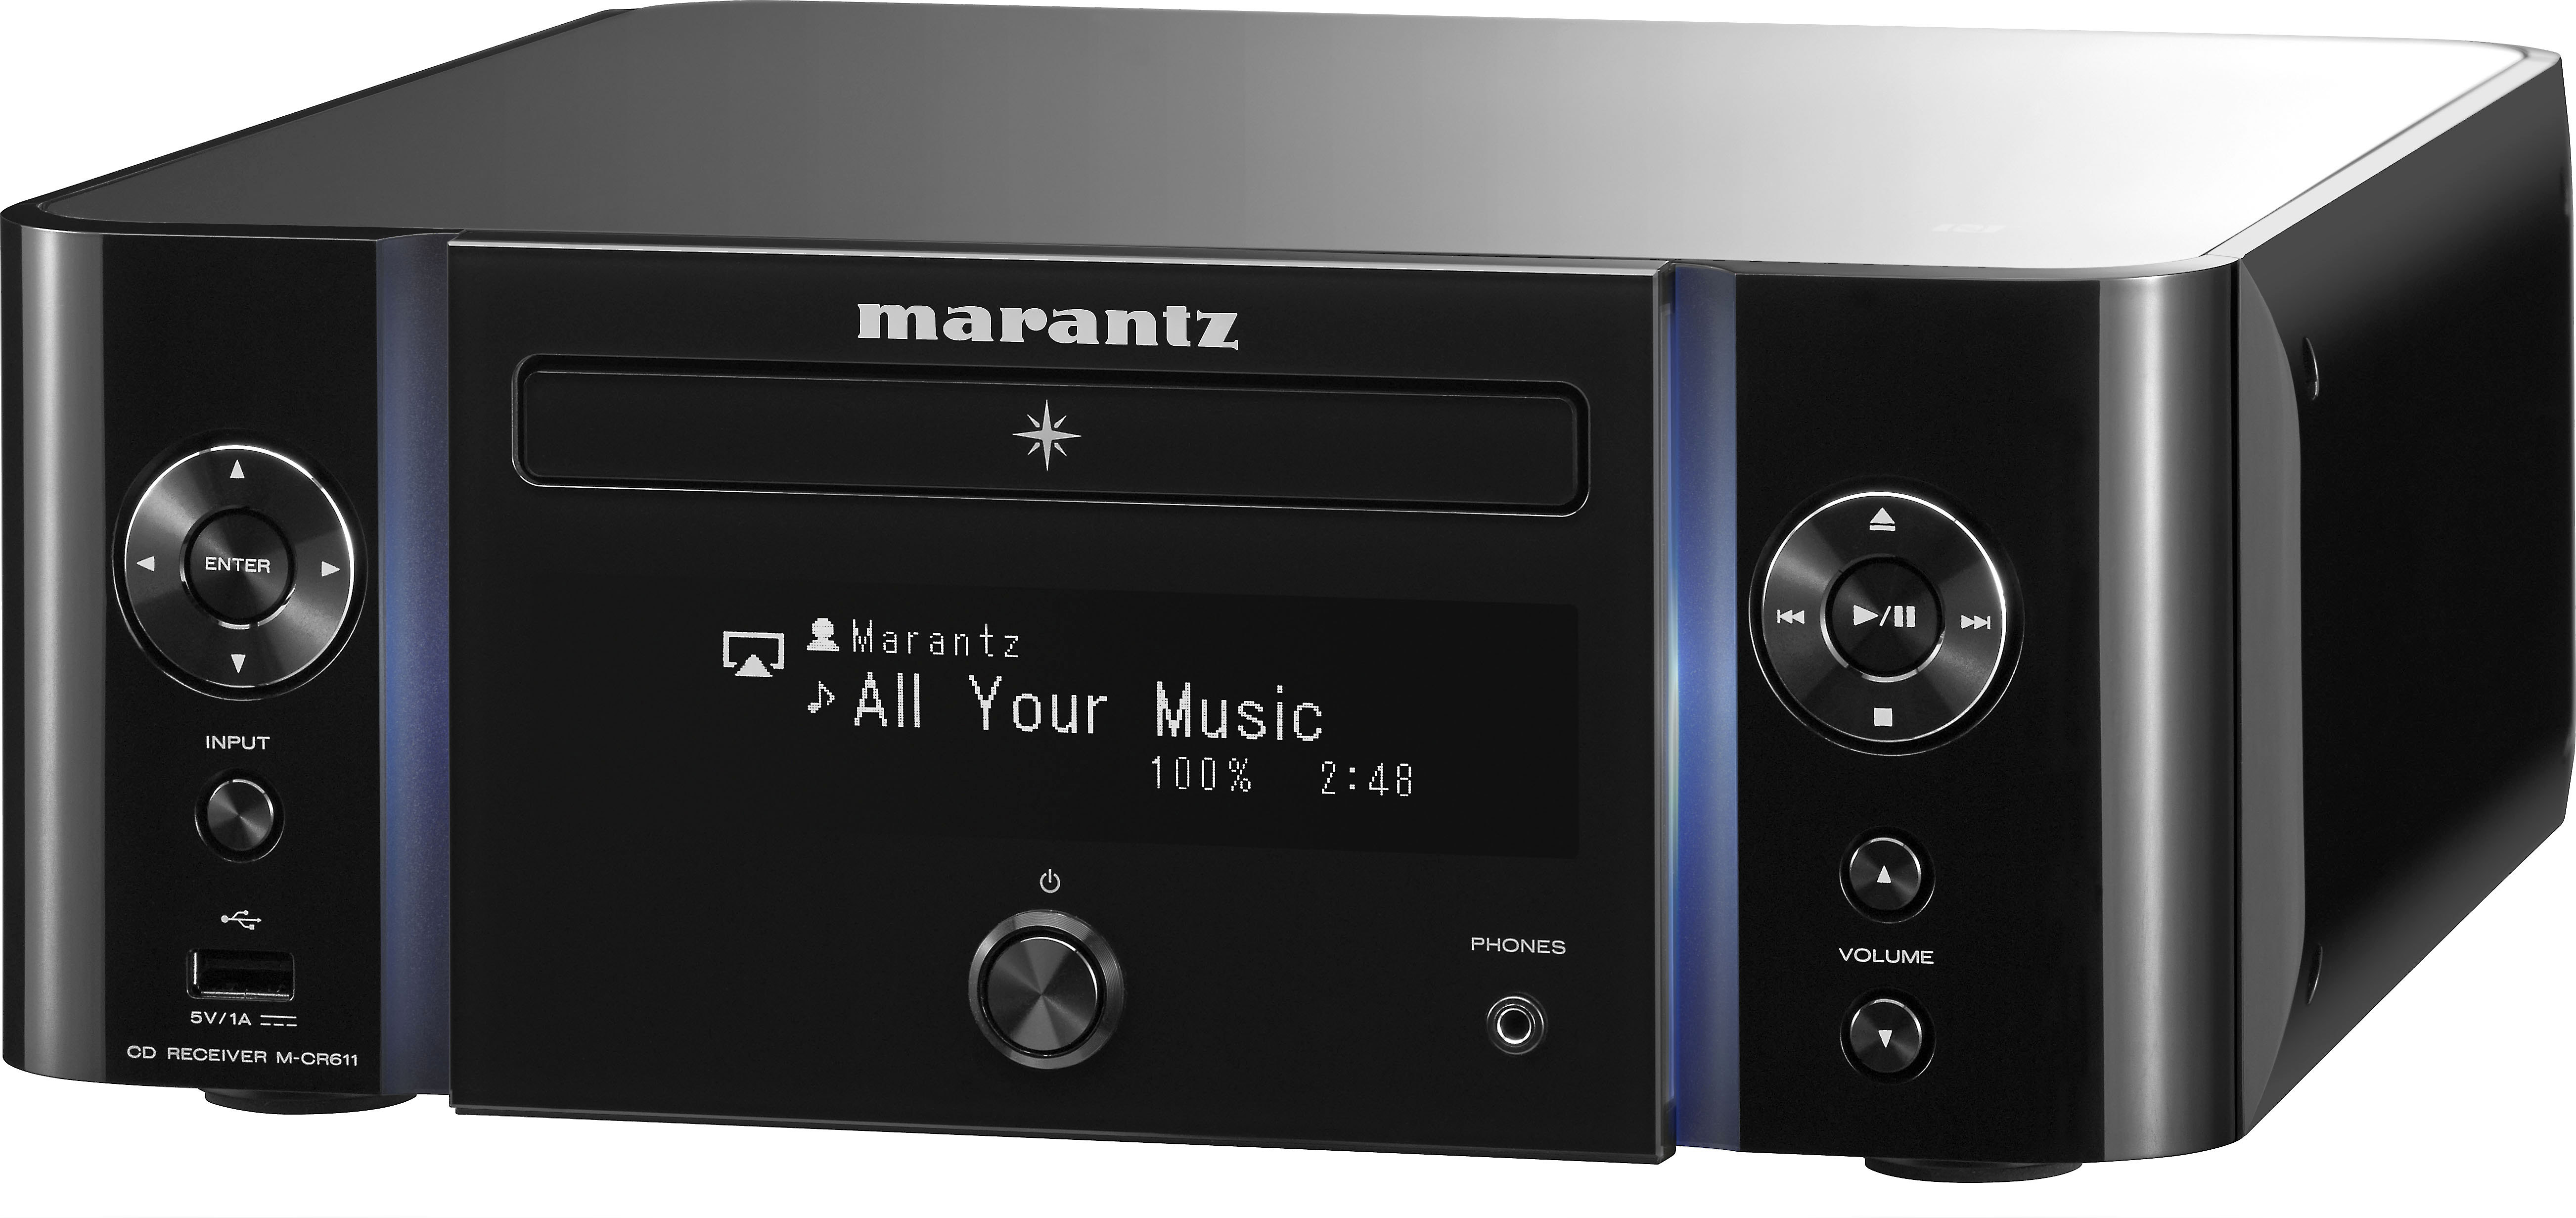 Troubleshooting Marantz Mcr611 Bluetooth Problems: A Quick Fix Guide